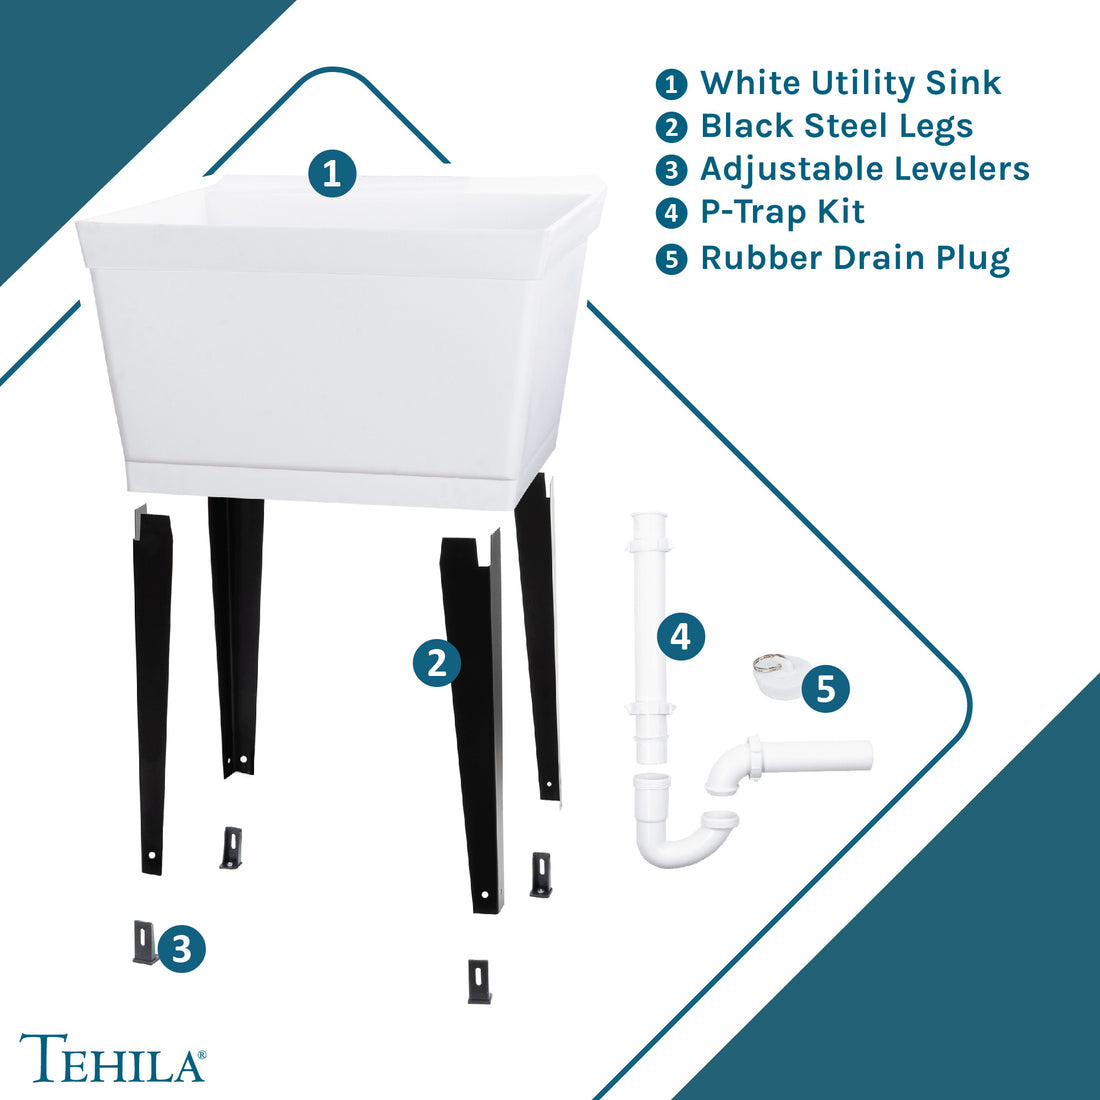 White Utility Sink | Black Steel Legs | Adjustable Levelers | P-trap Kit | Rubber Drain Plug